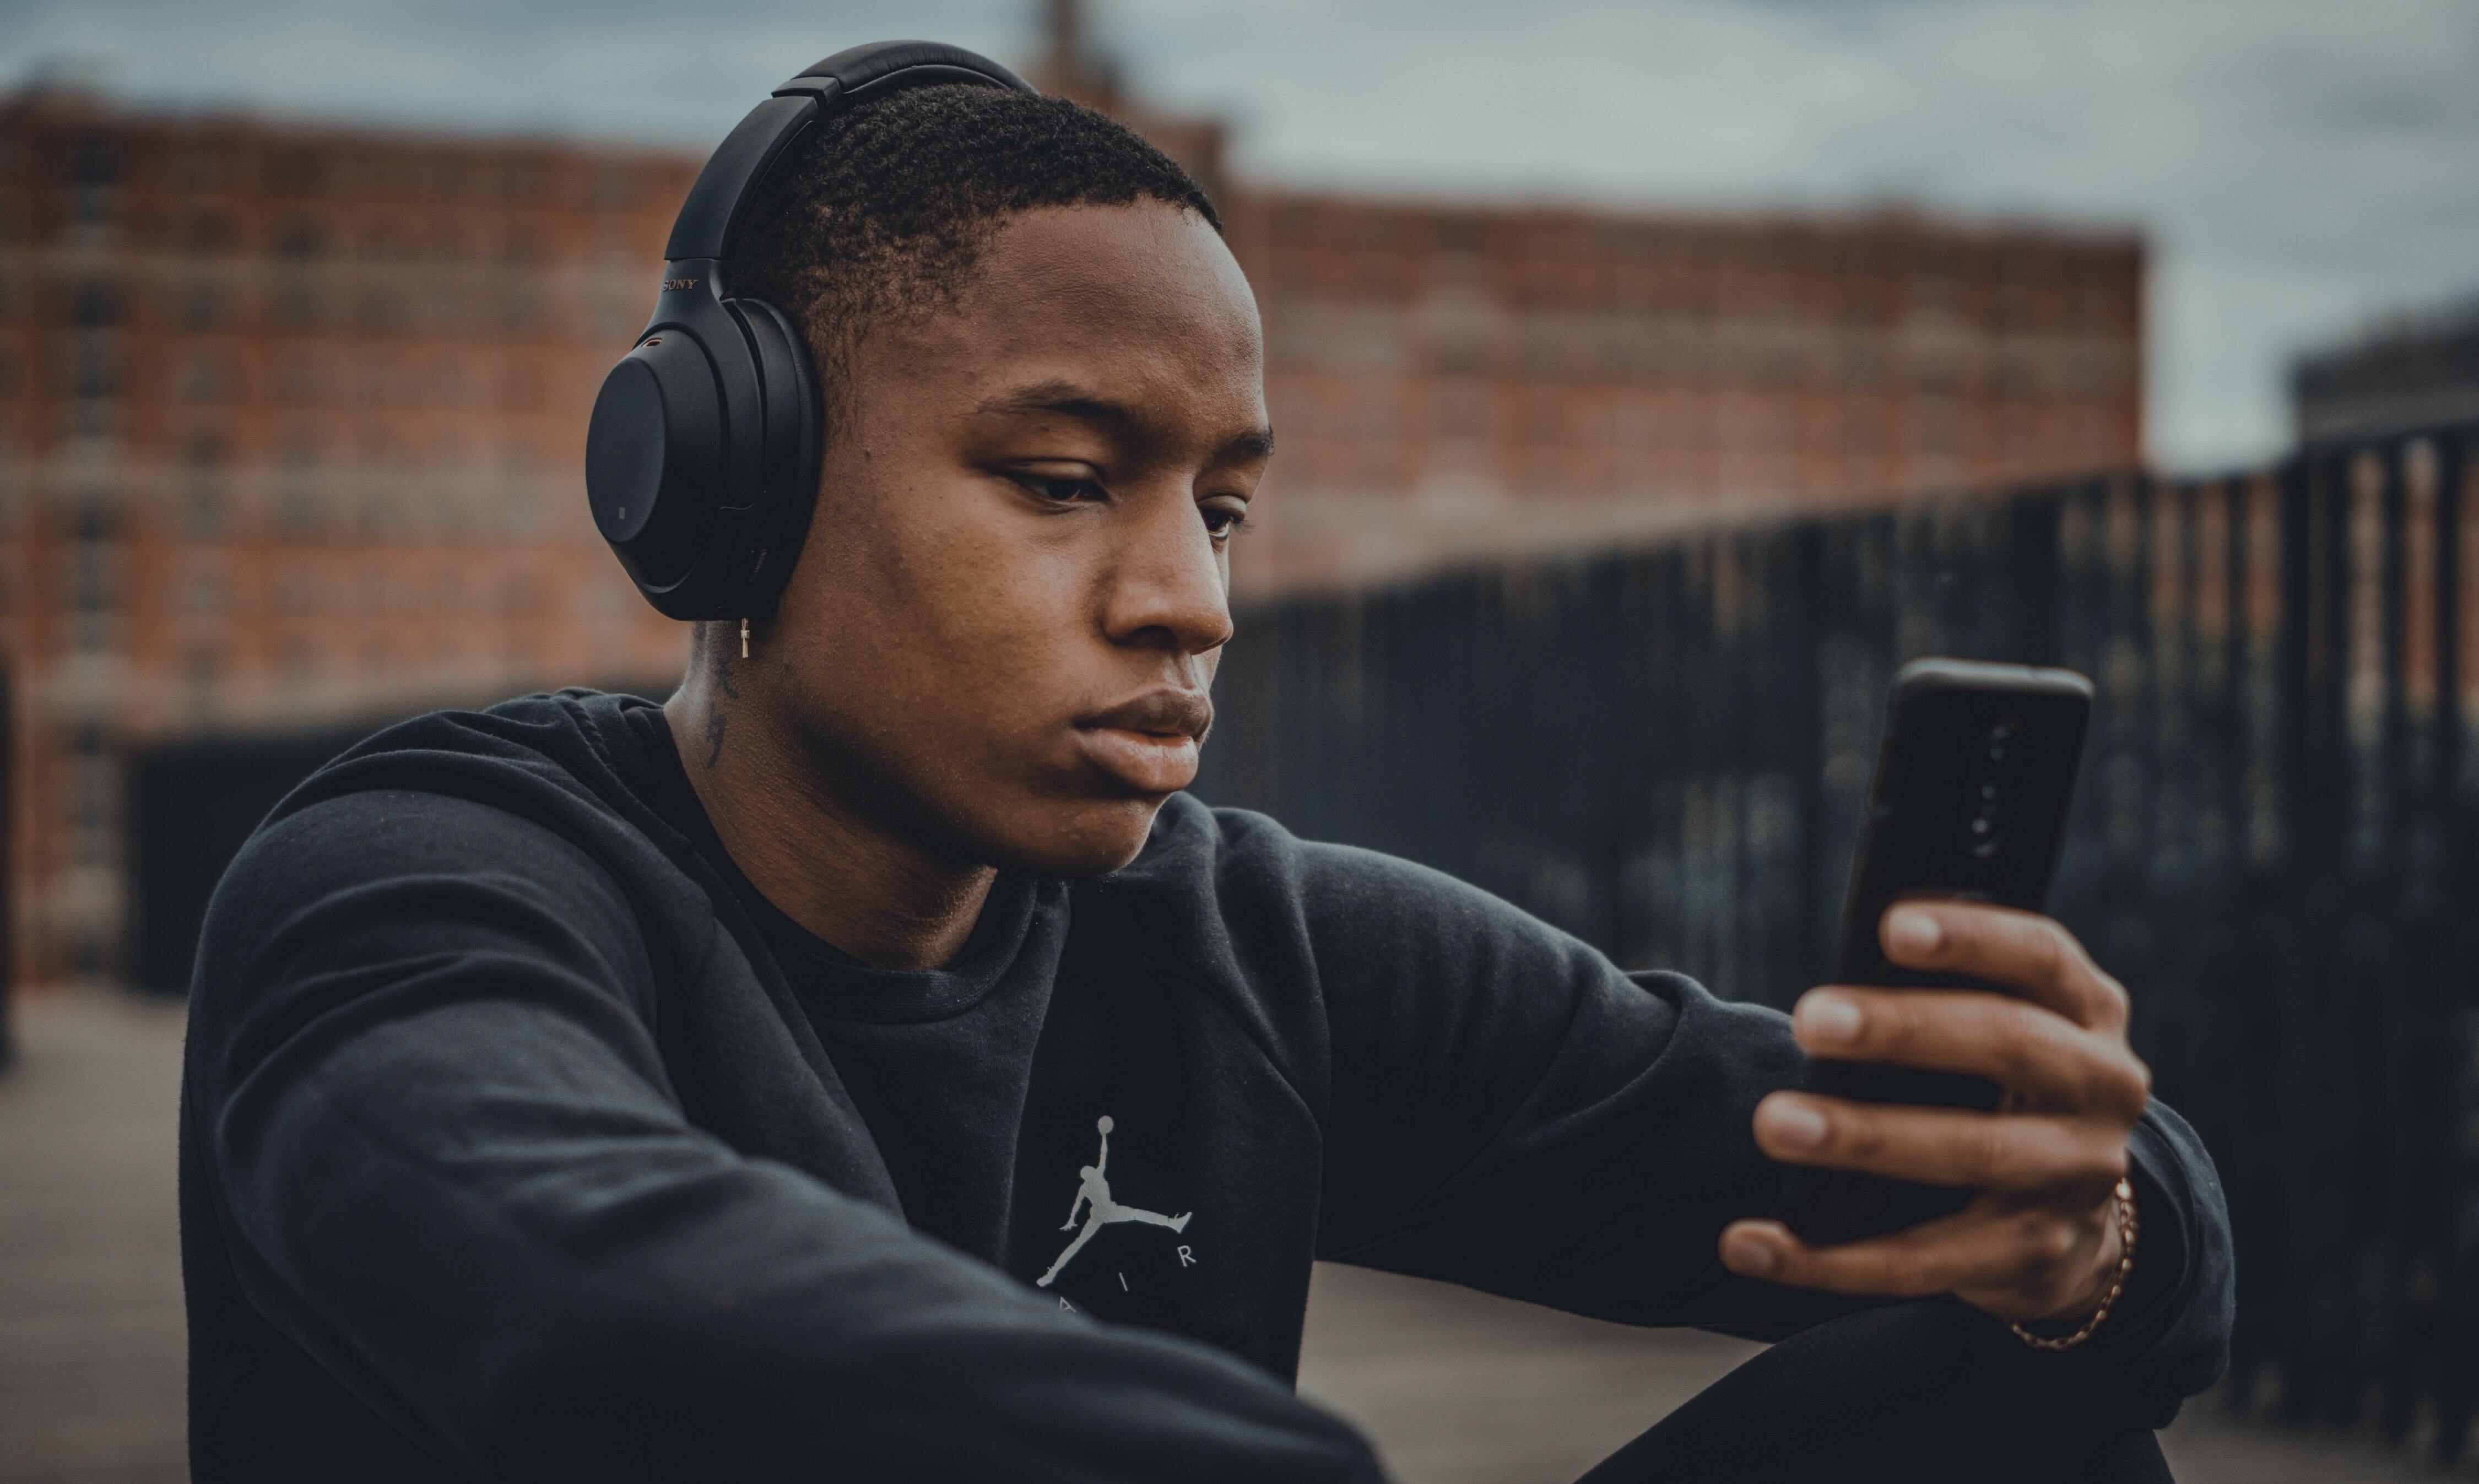 Man in black hoodie wearing headphones and holding a smartphone